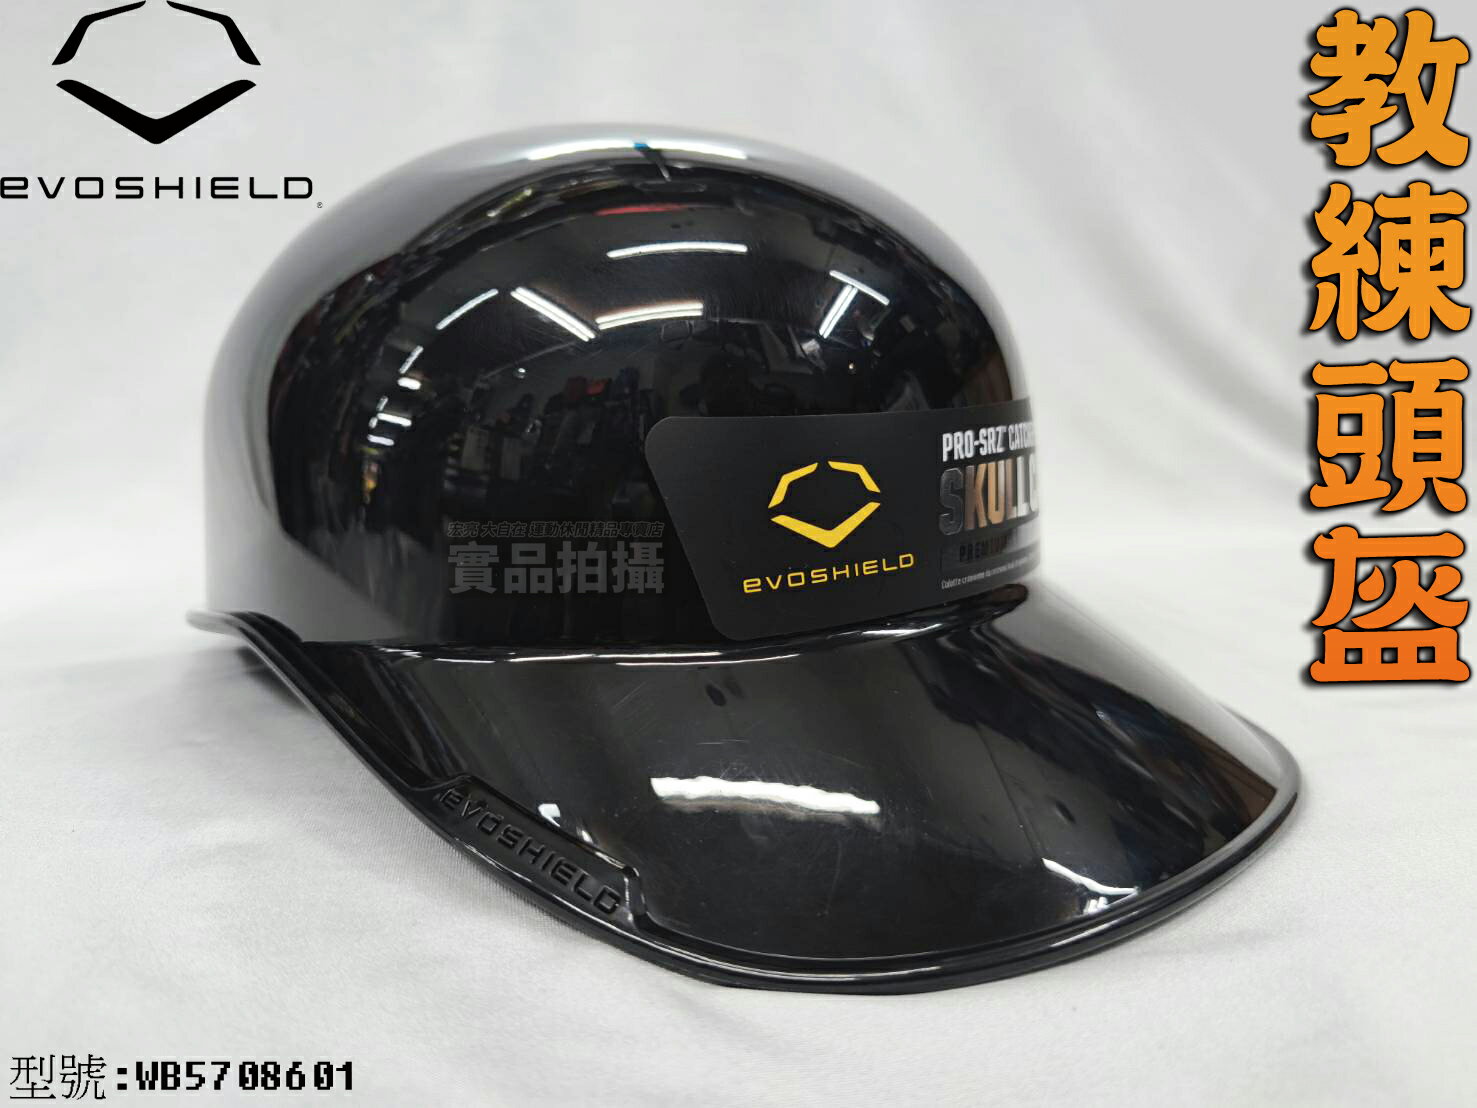 EVO EVOSHIELD PRO-SRZ 教練頭盔 捕手頭盔 護具 壘球 棒球 亮面 WB5708601 大自在